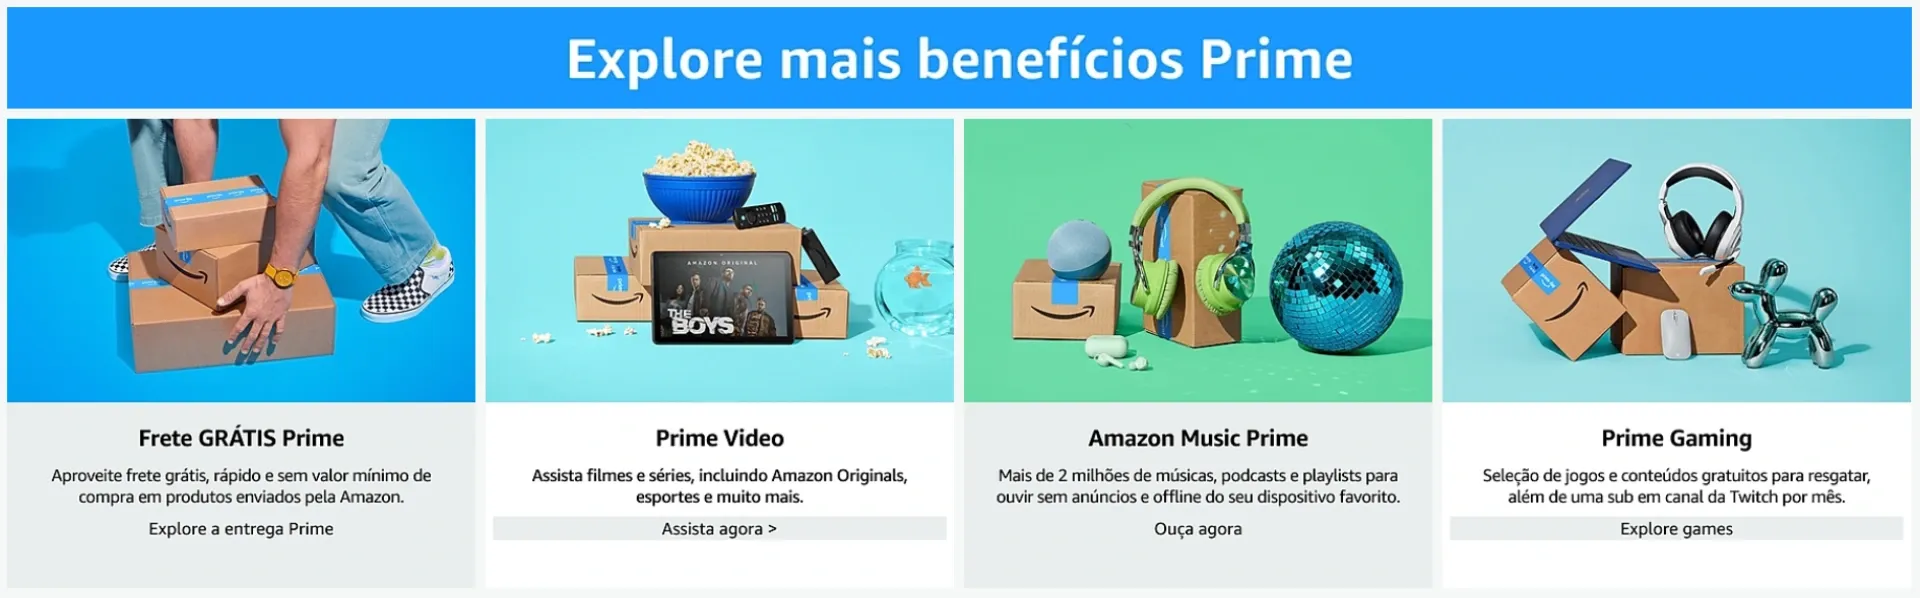 Captura de tela do site da Amazon mostrando os benefícios do programa Amazon Prime